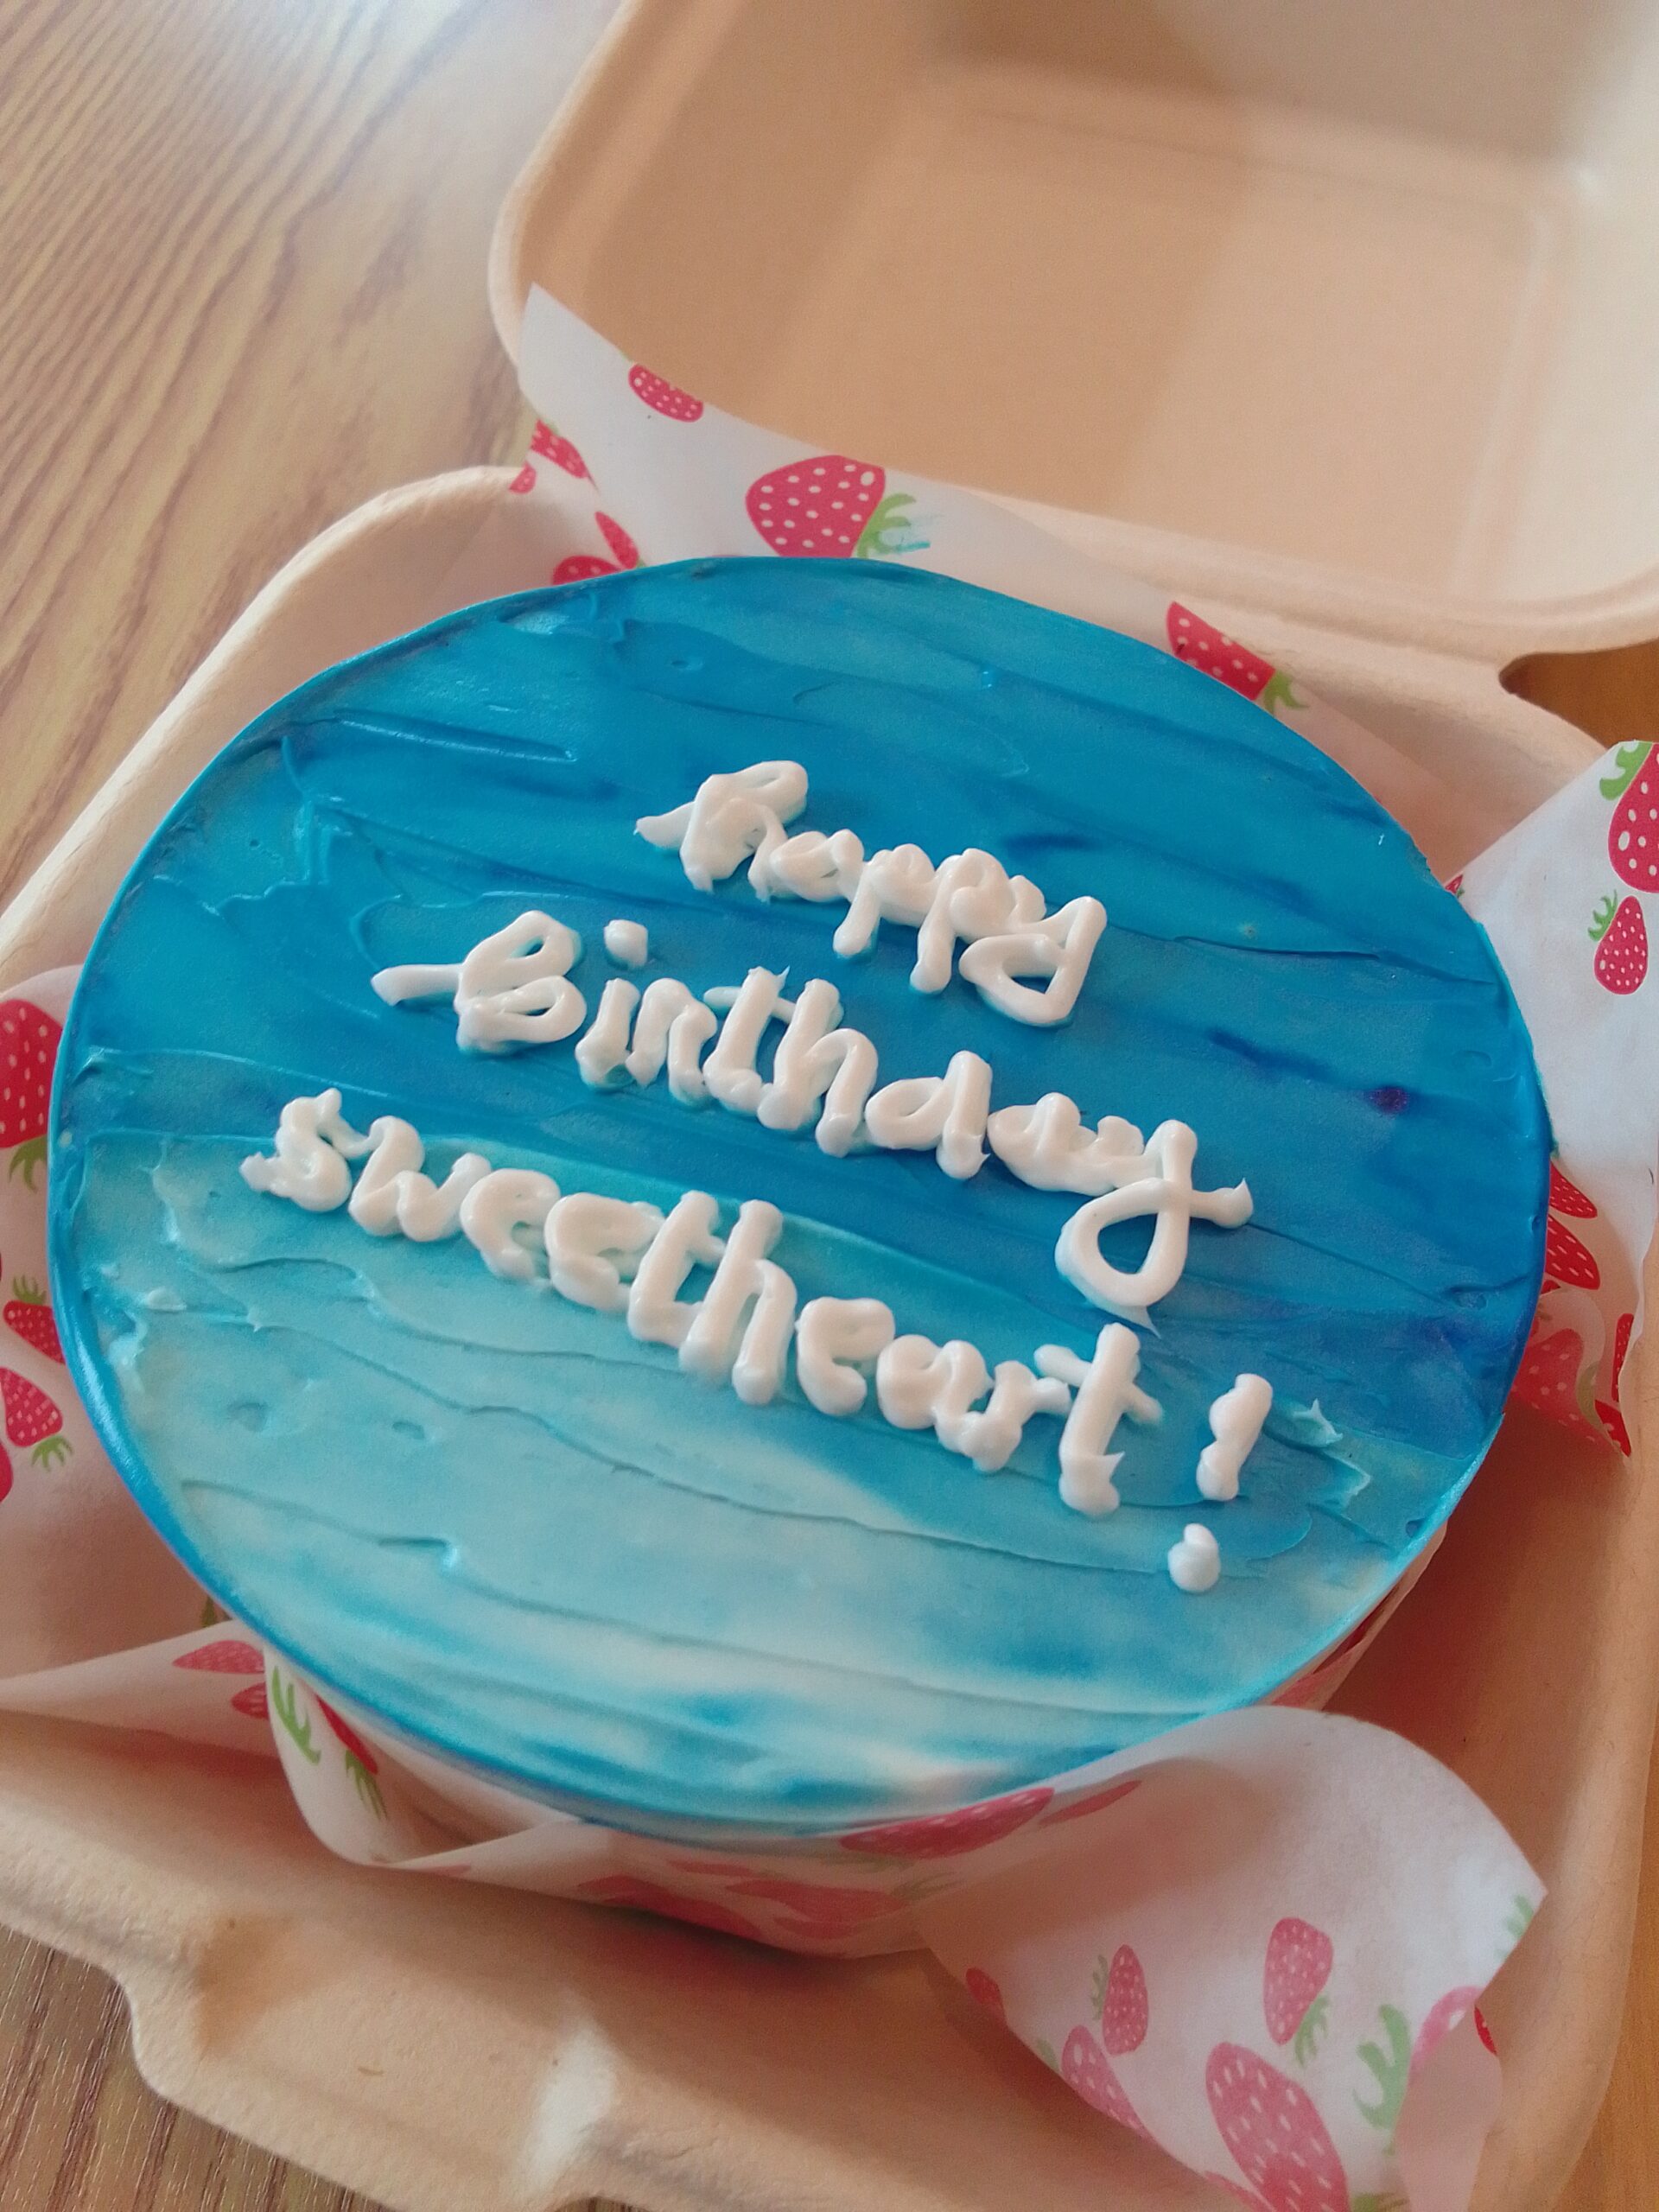 Sweetheart Cake Singapore - Gra Baking Academy